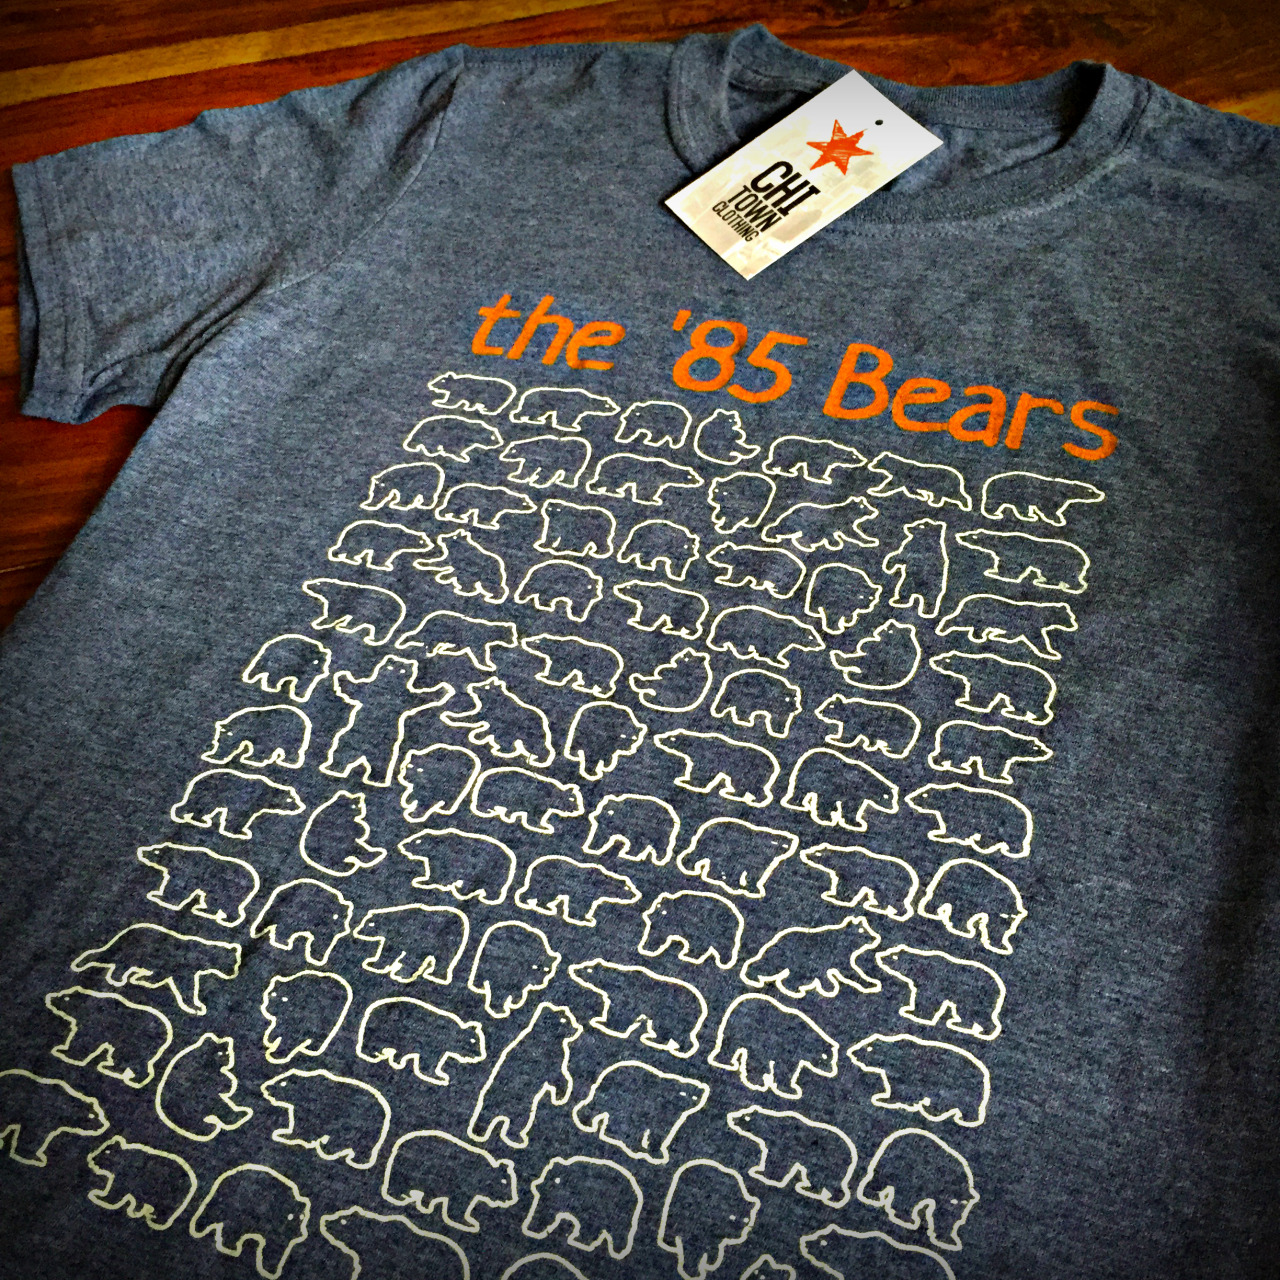 the 85 bears shirt